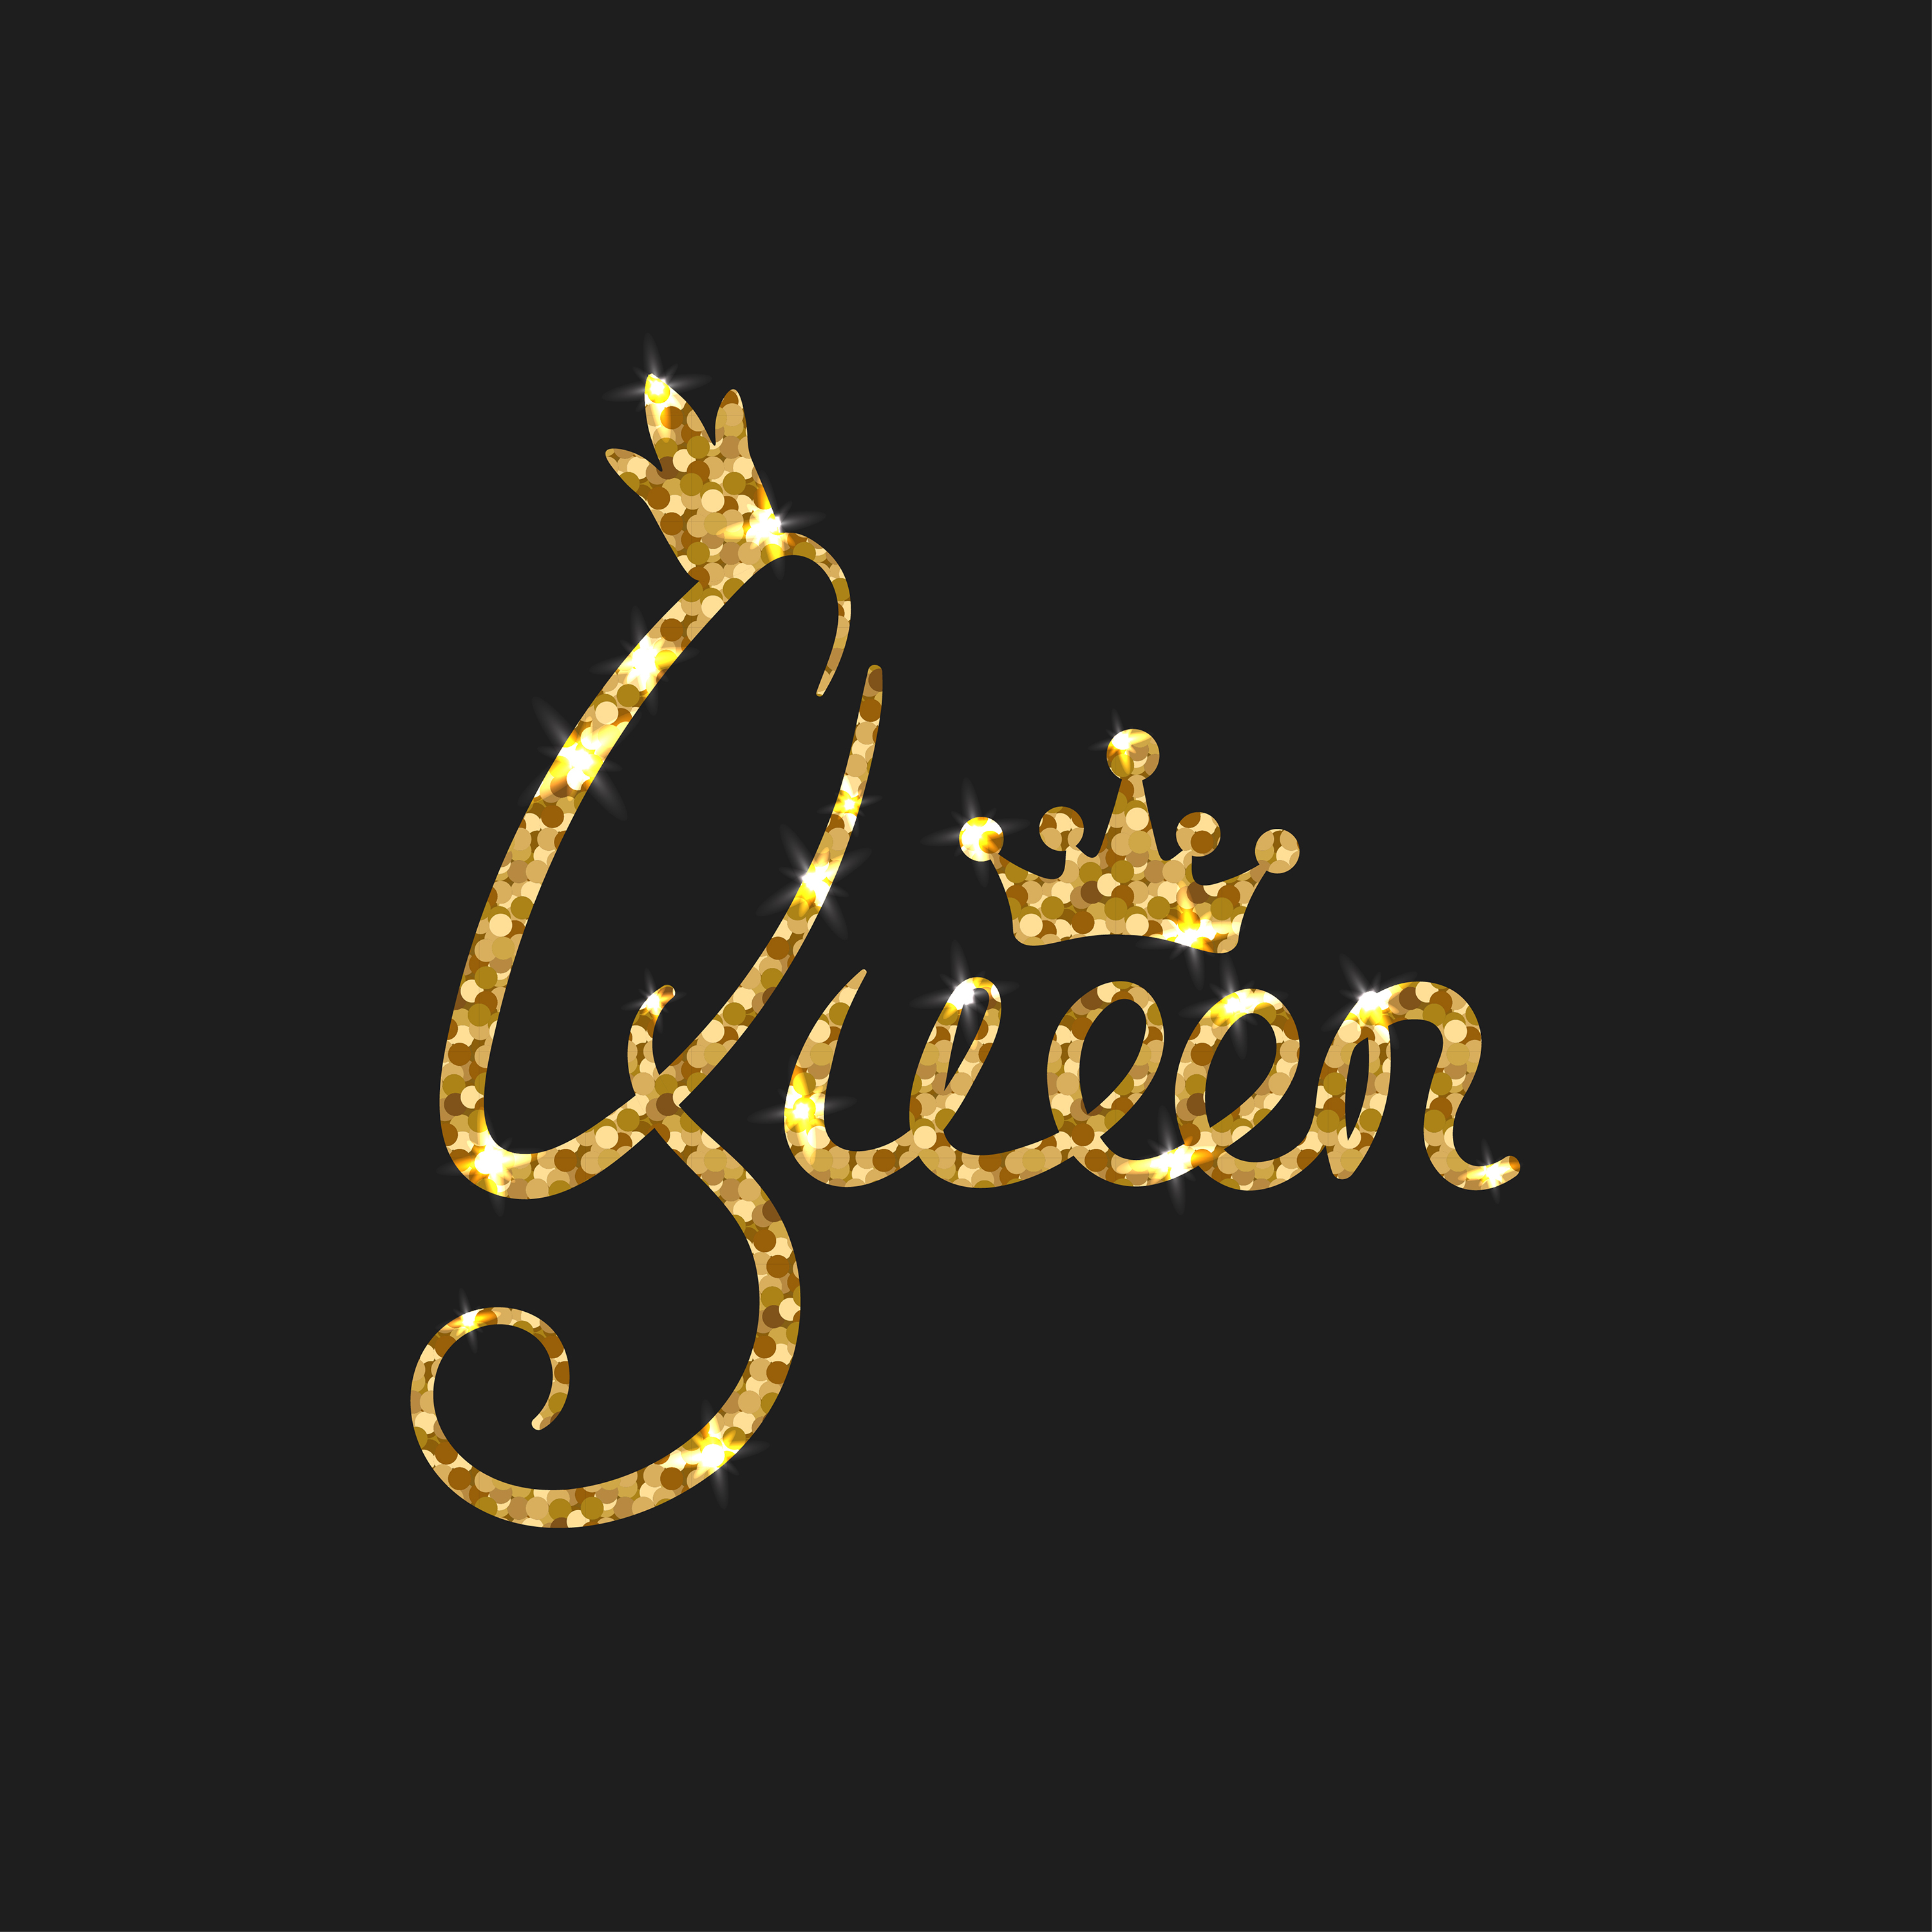 Queen golden text card. for Vecteezy Vector Modern brush at Art 275023 calligraphy